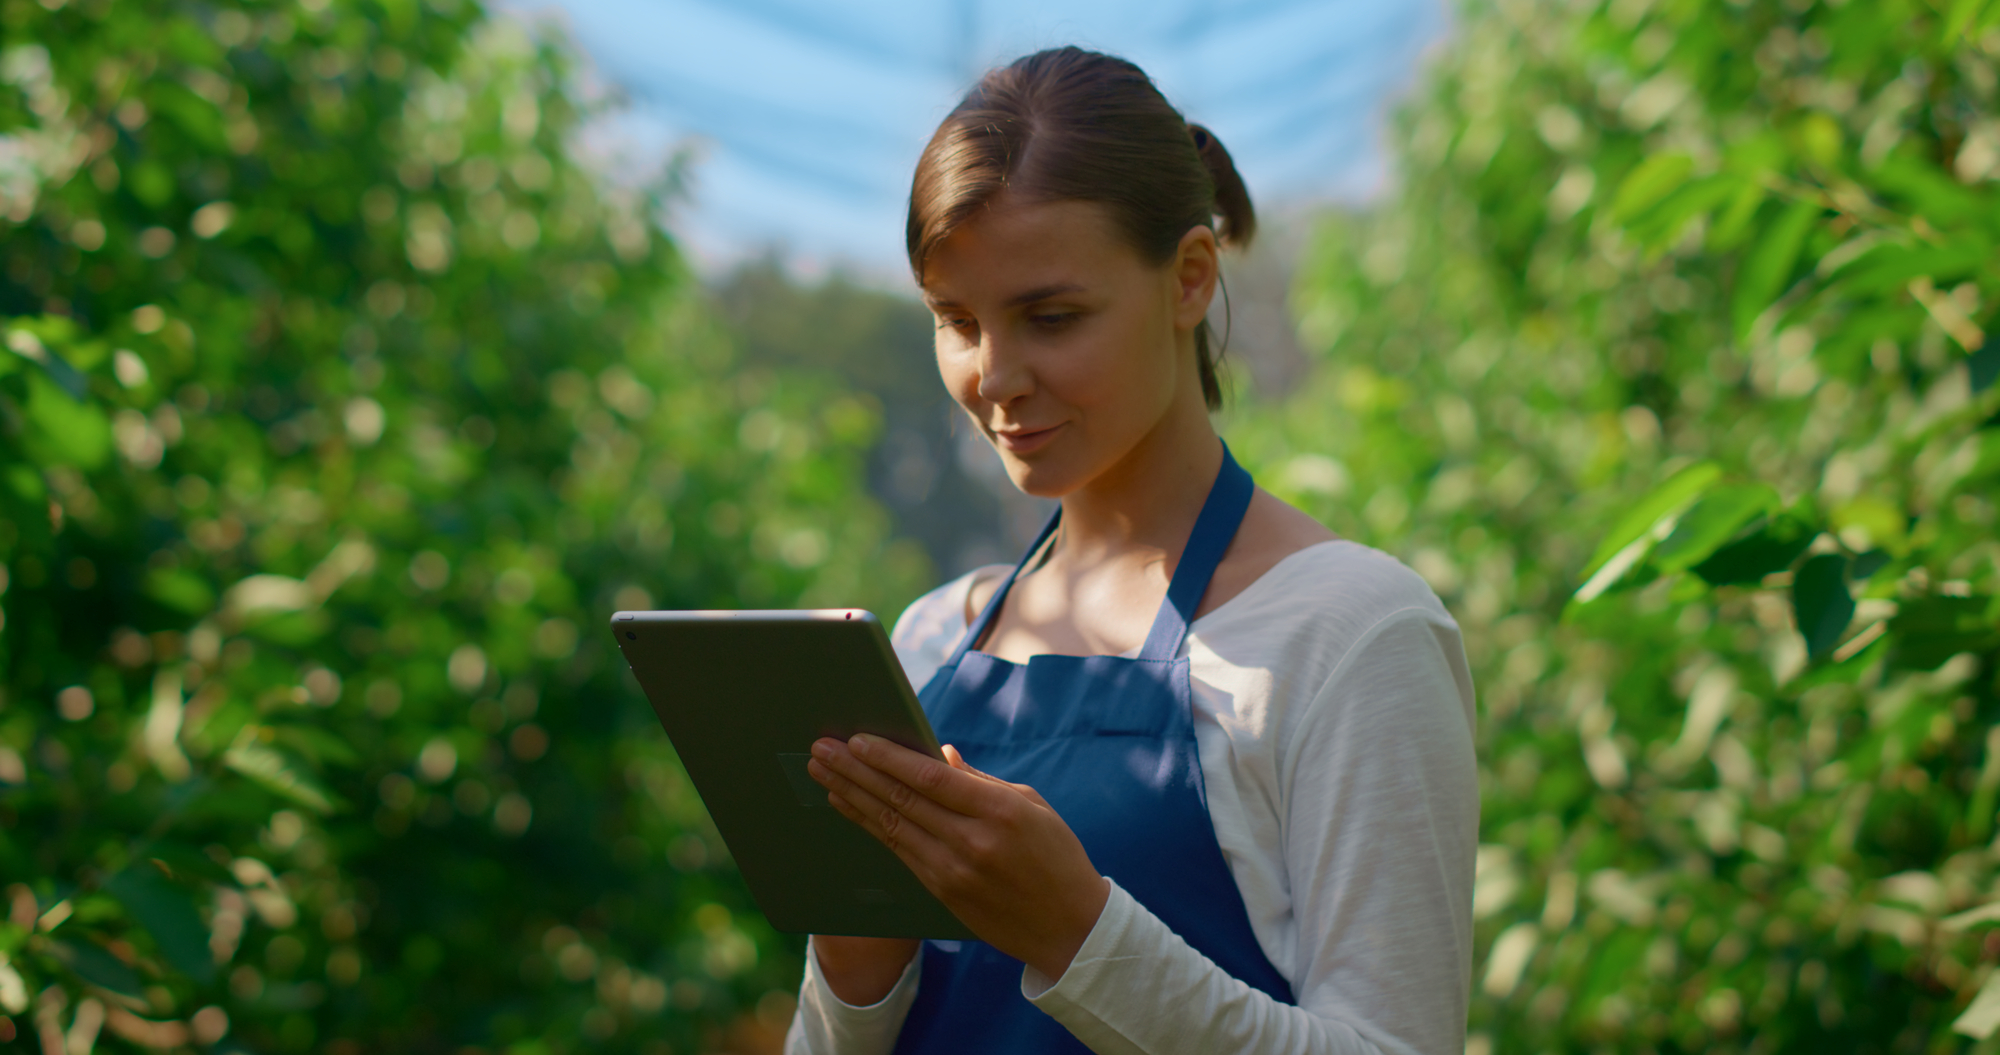 Agriculture Business owner on tablet agri-finance concept